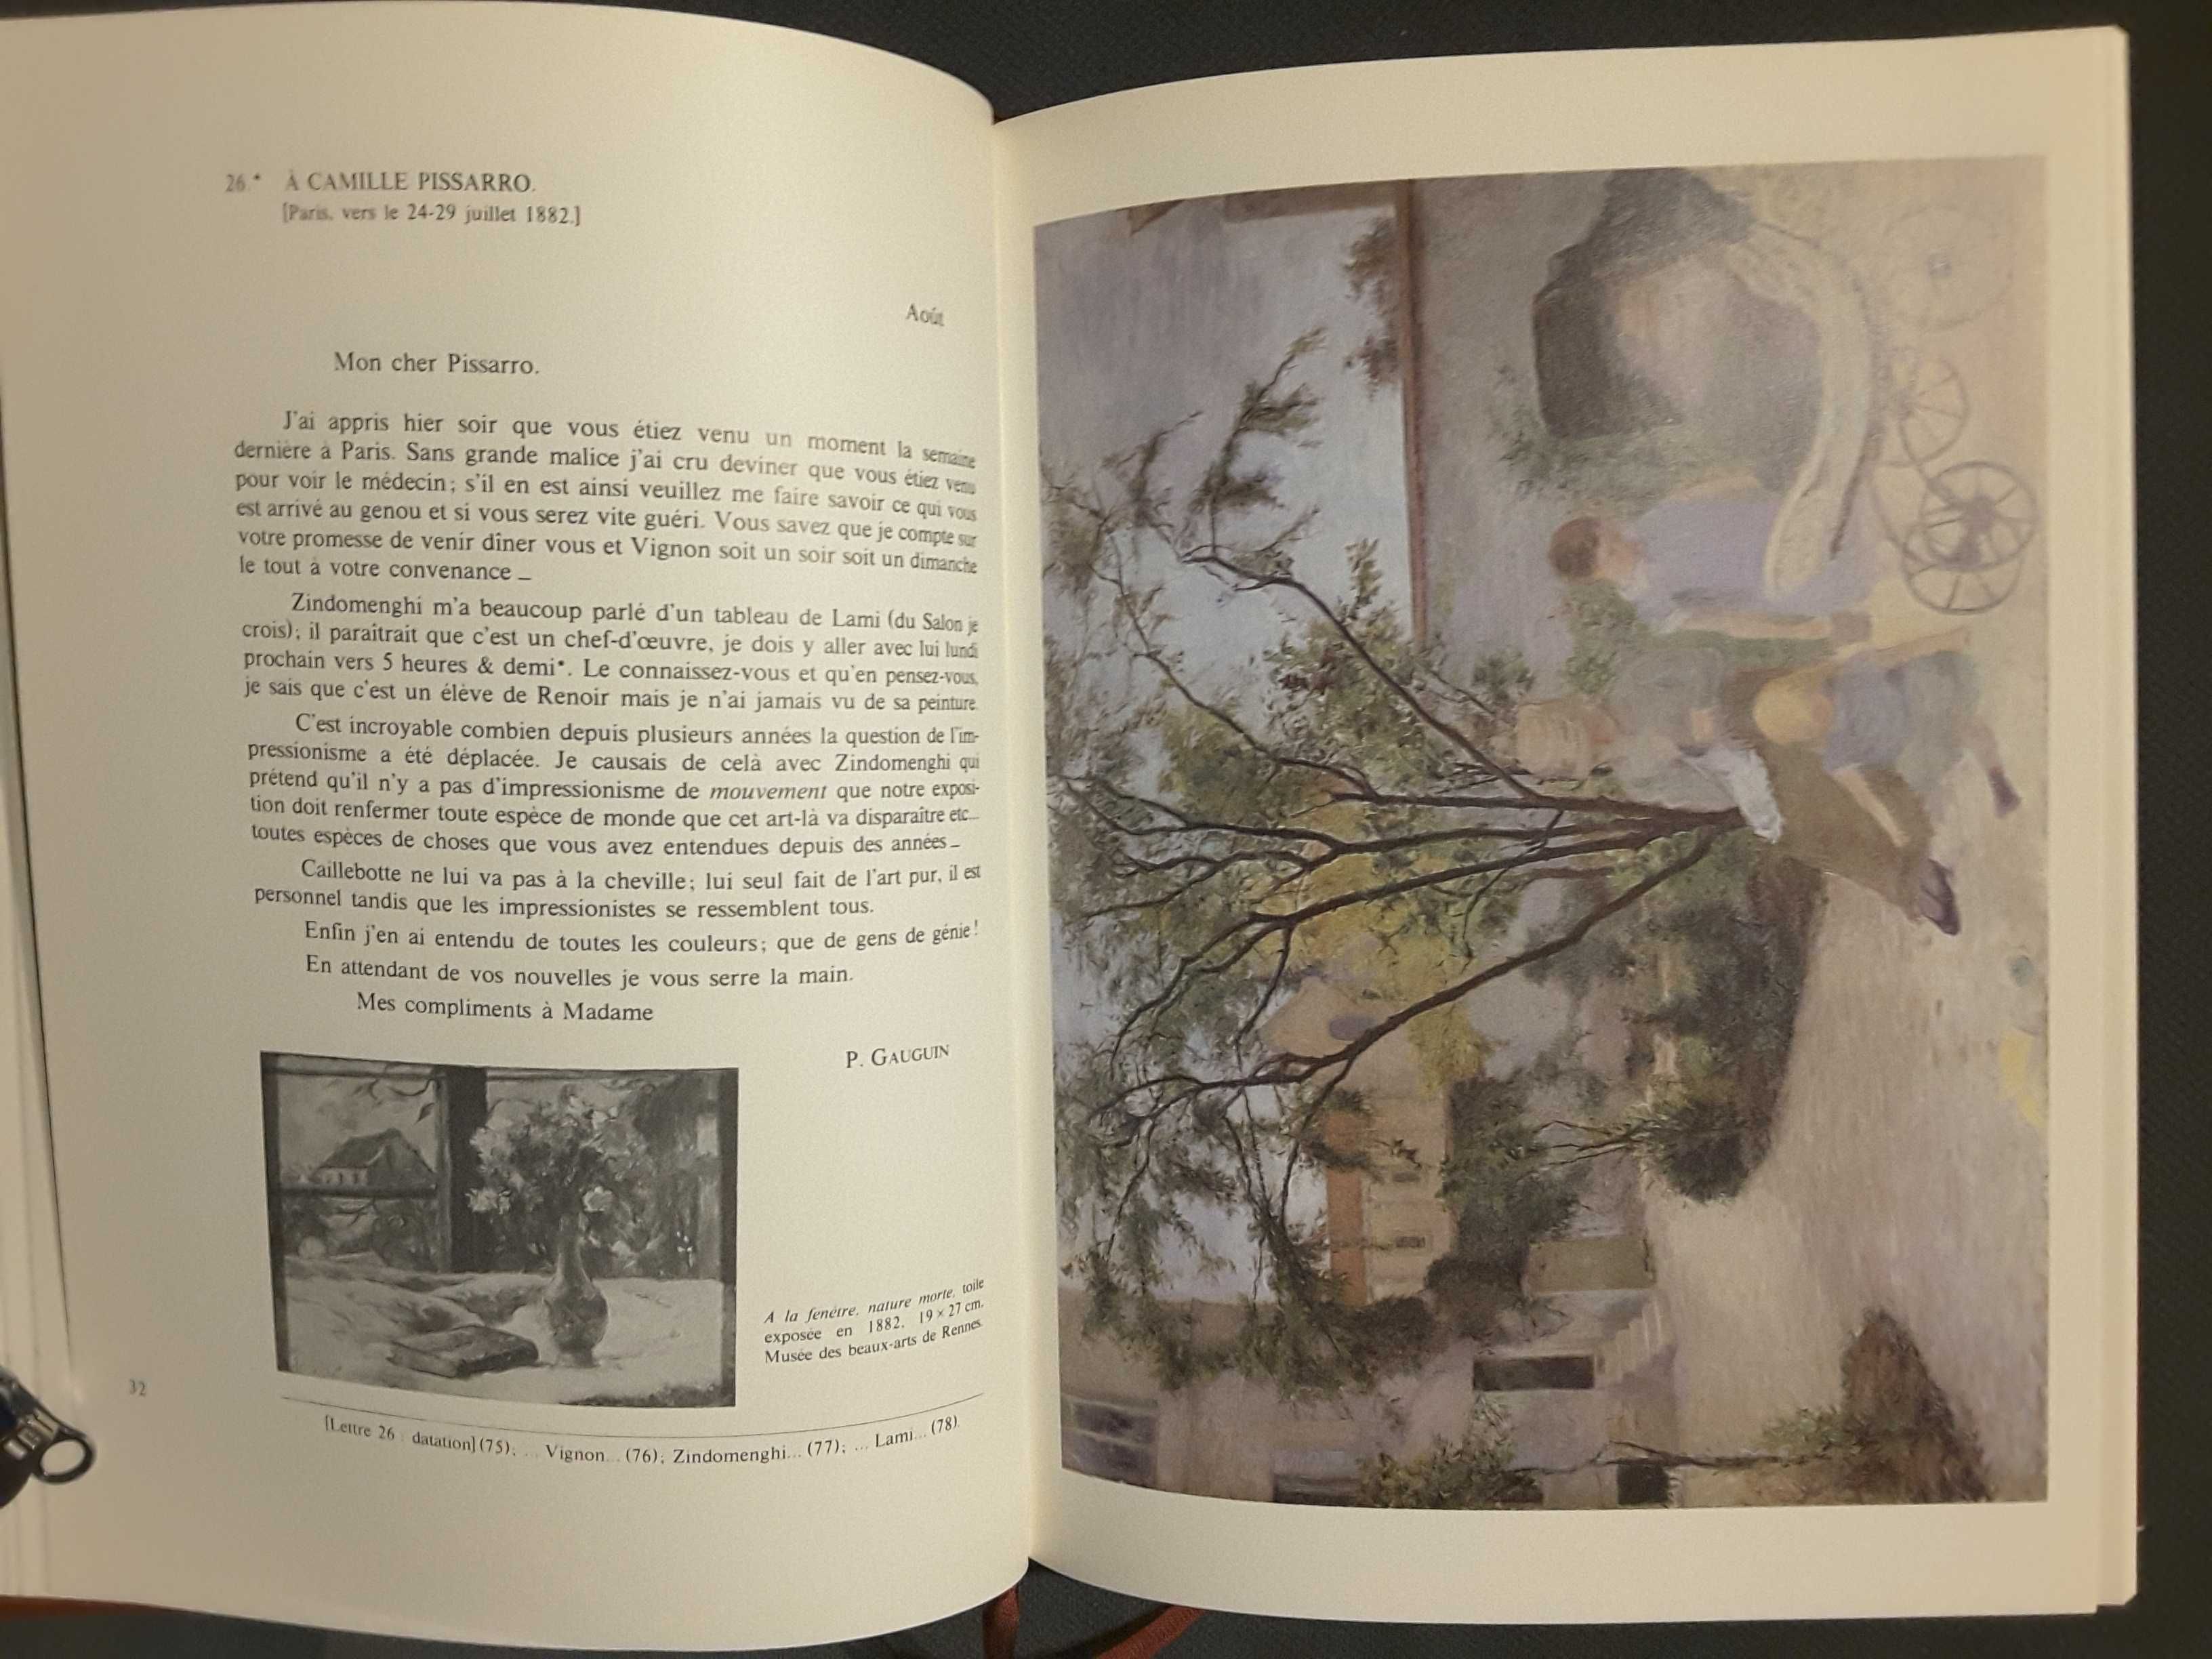 Contemporary Art in Africa (1968) / Correspondance de Paul Gauguin